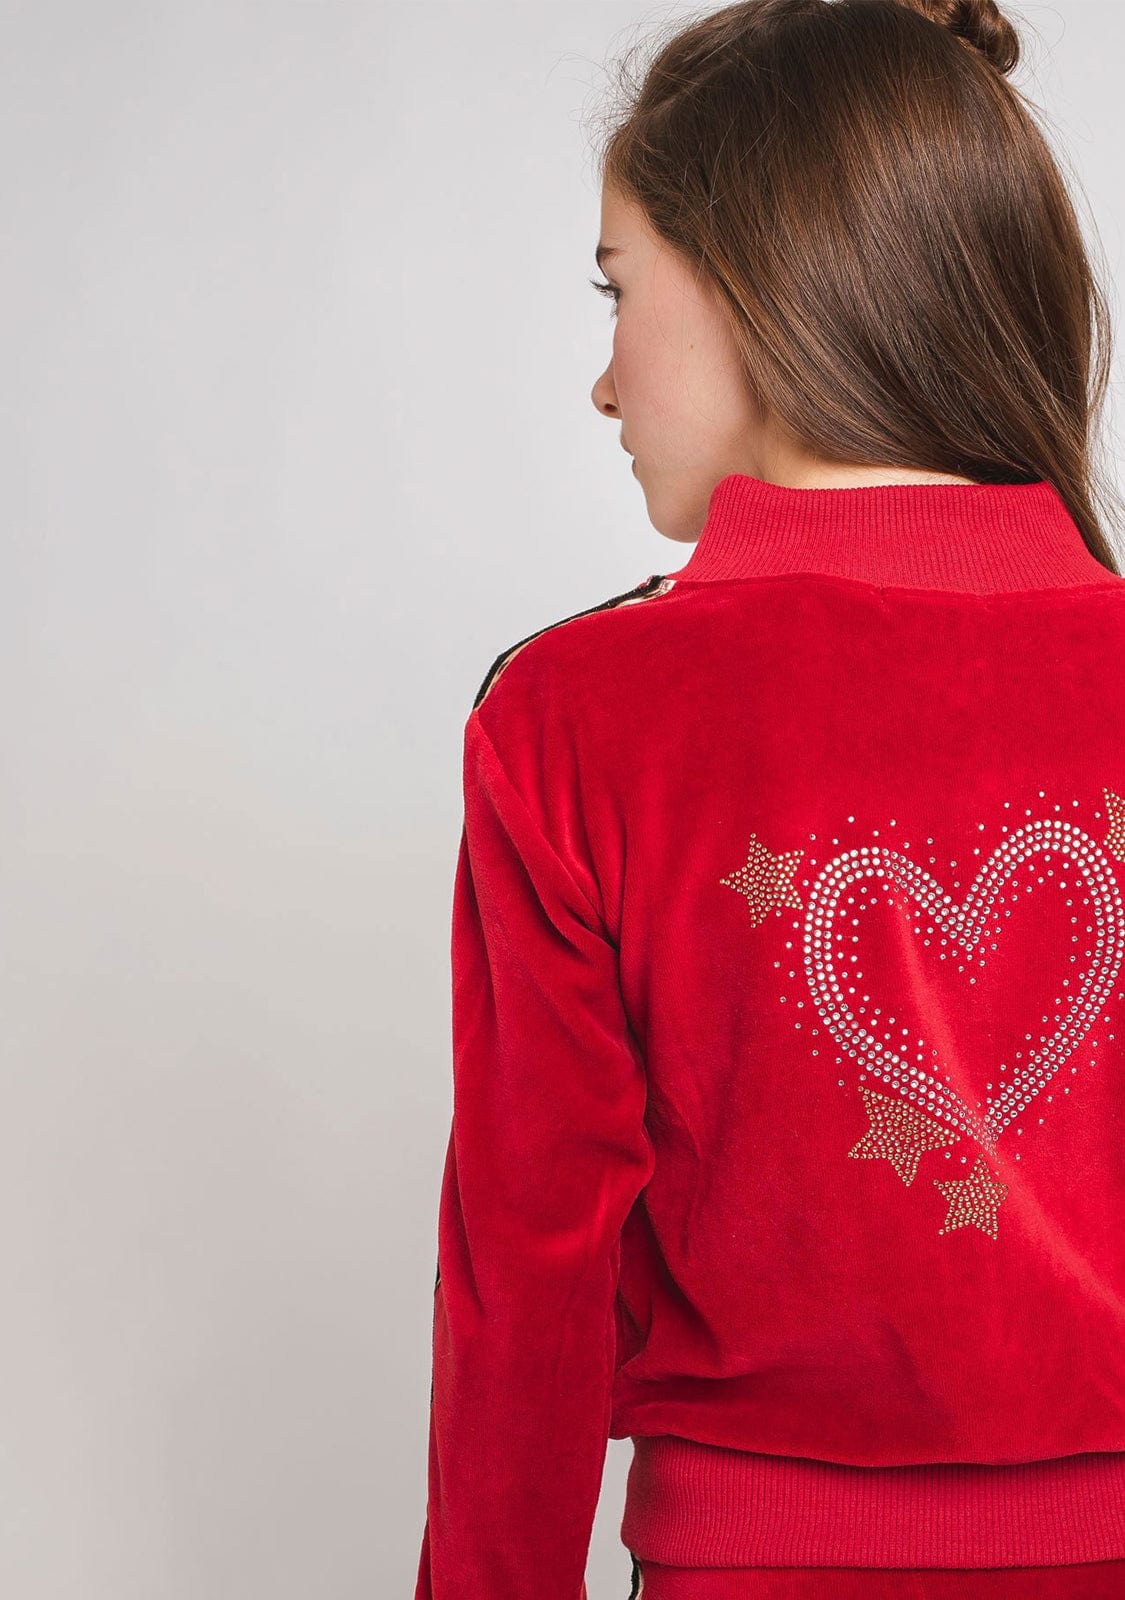 CONGUITOS TEXTIL Clothing Girl's Red Velvet Tracksuit Jacket